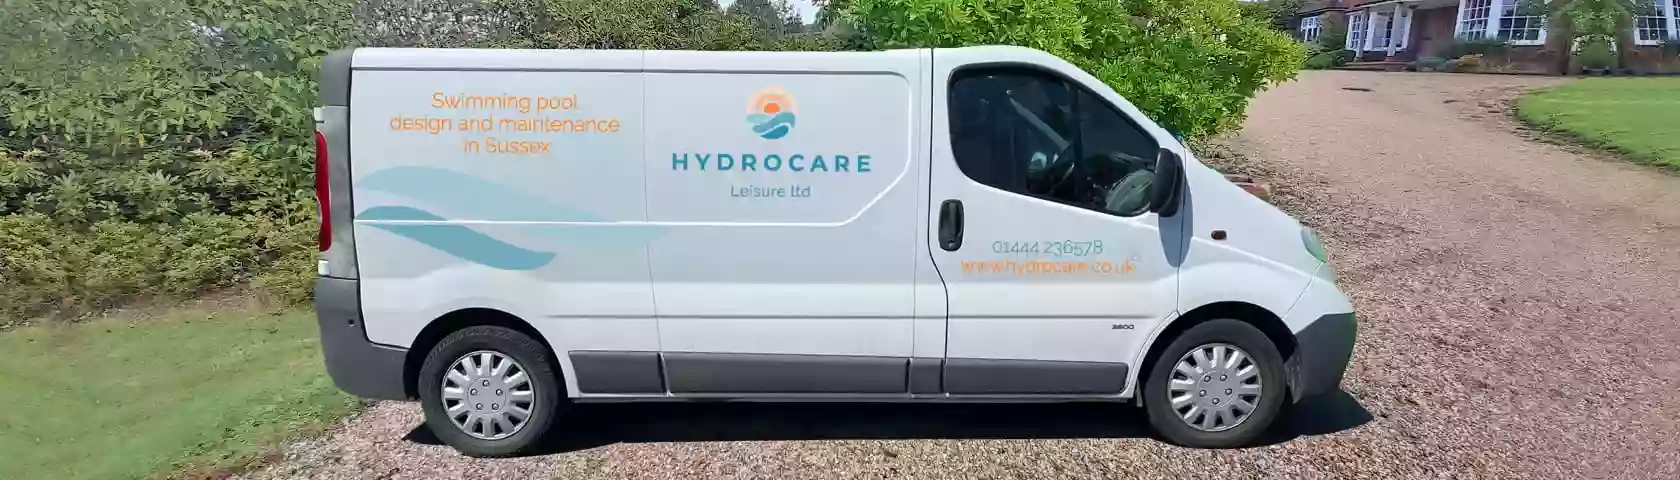 Hydrocare Leisure Ltd